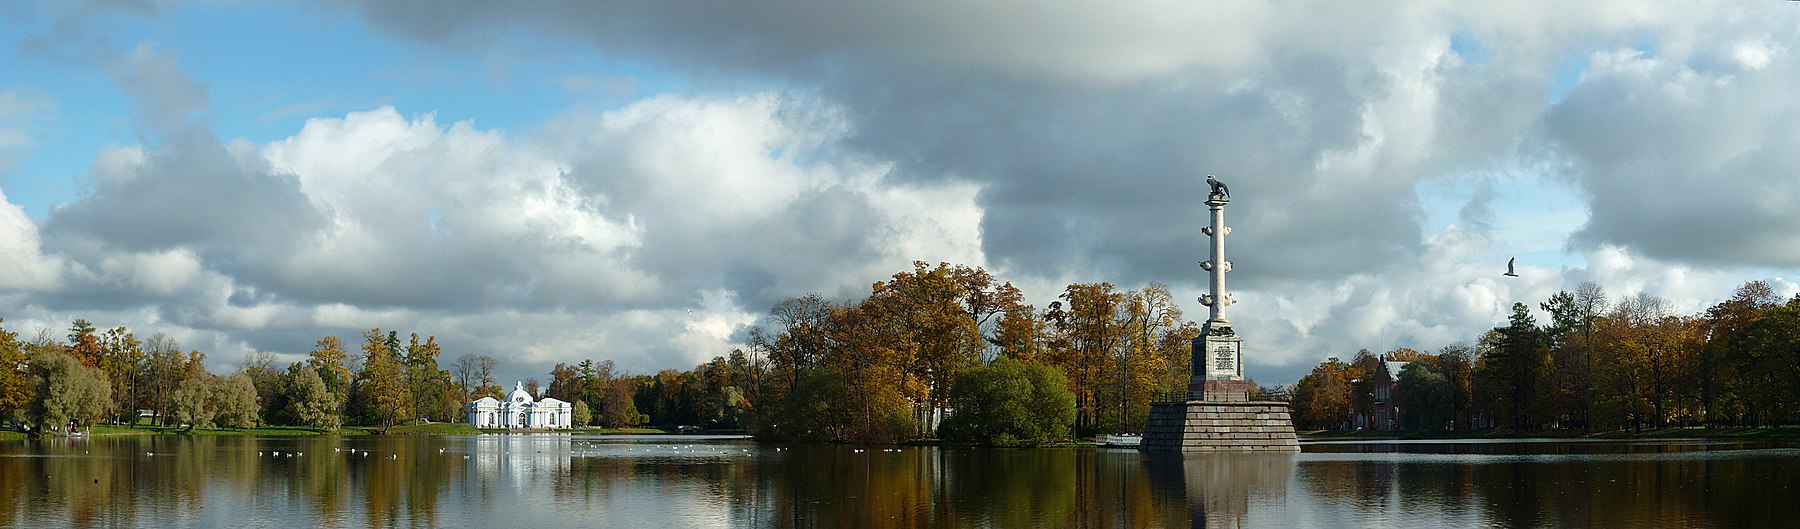 Large pond, Catherine Park, city of Pushkin, photo by user Utro boyarskogo, license under CC BY-SA 3.0